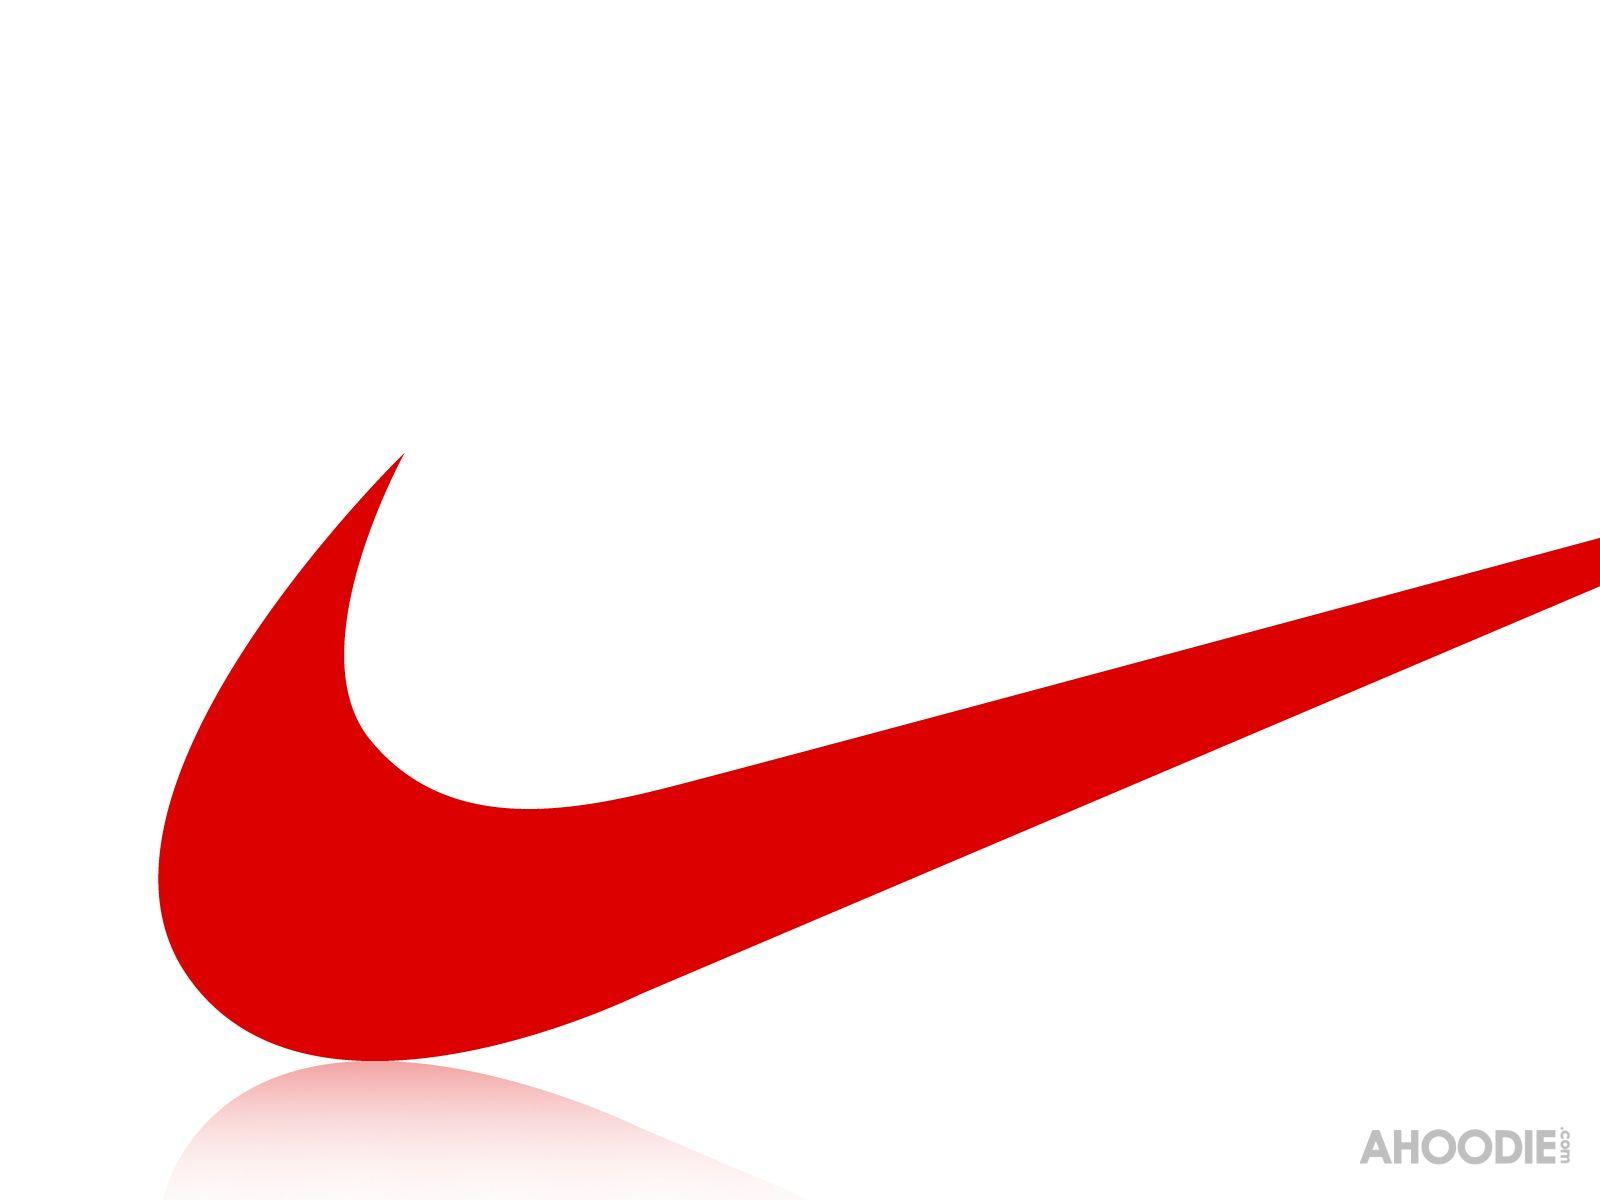 Red Swoosh Logo - Nike Swoosh Wallpaper - Wallpapers Browse